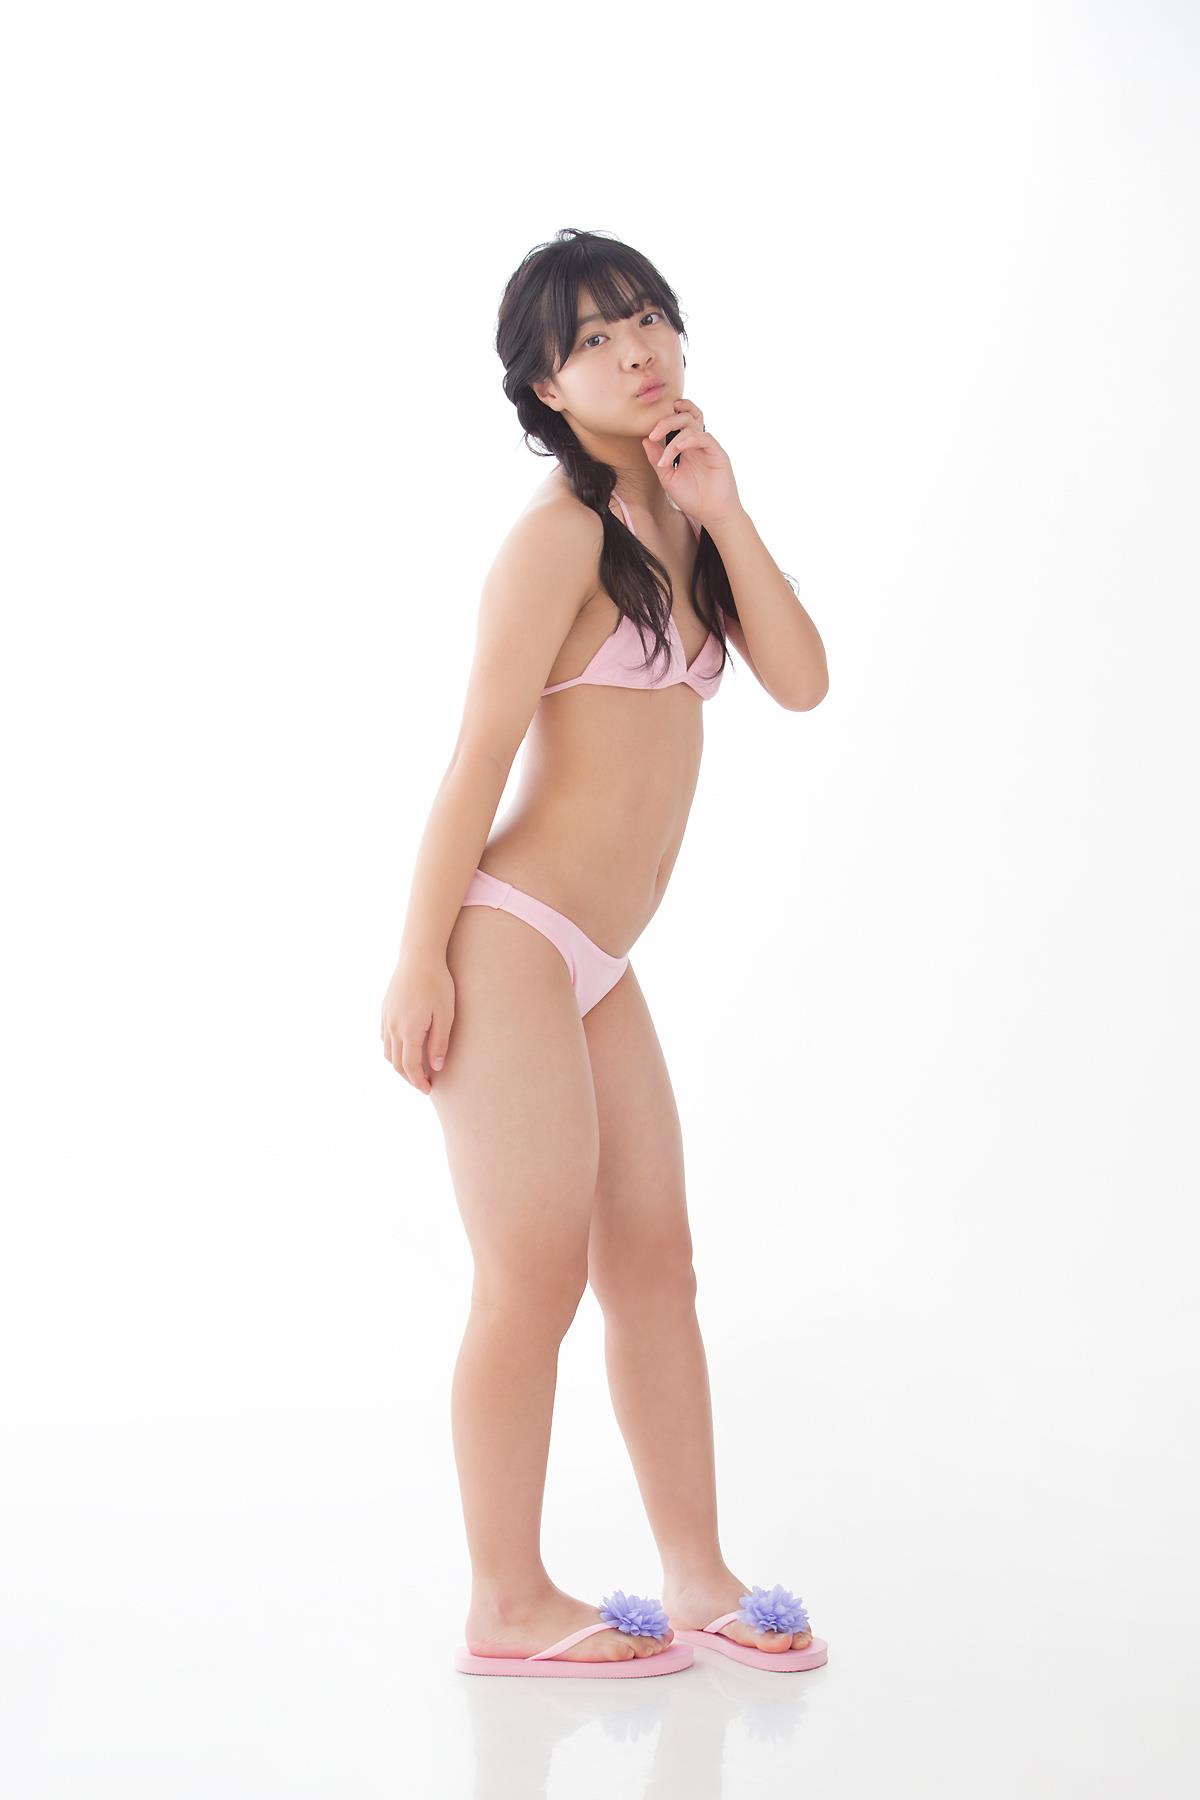 Minisuka.tv Saria Natsume 夏目咲莉愛 - Premium Gallery 2.4 - 10.jpg